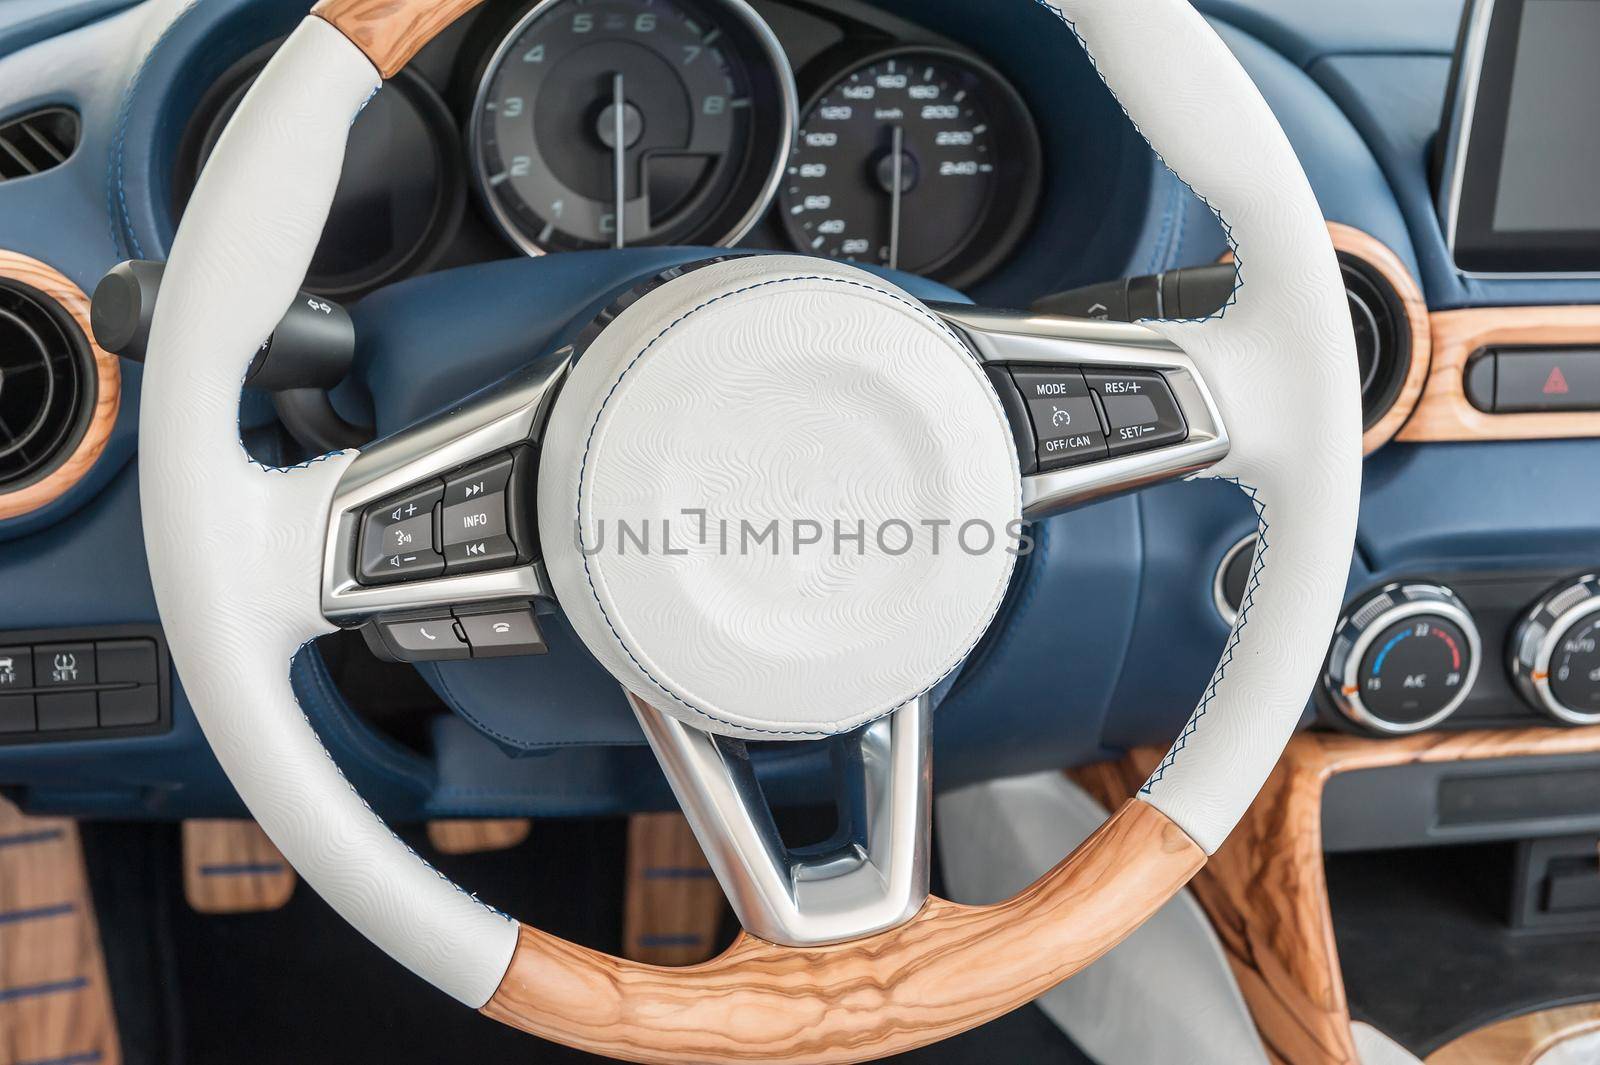 Modern car interior with a white wheel